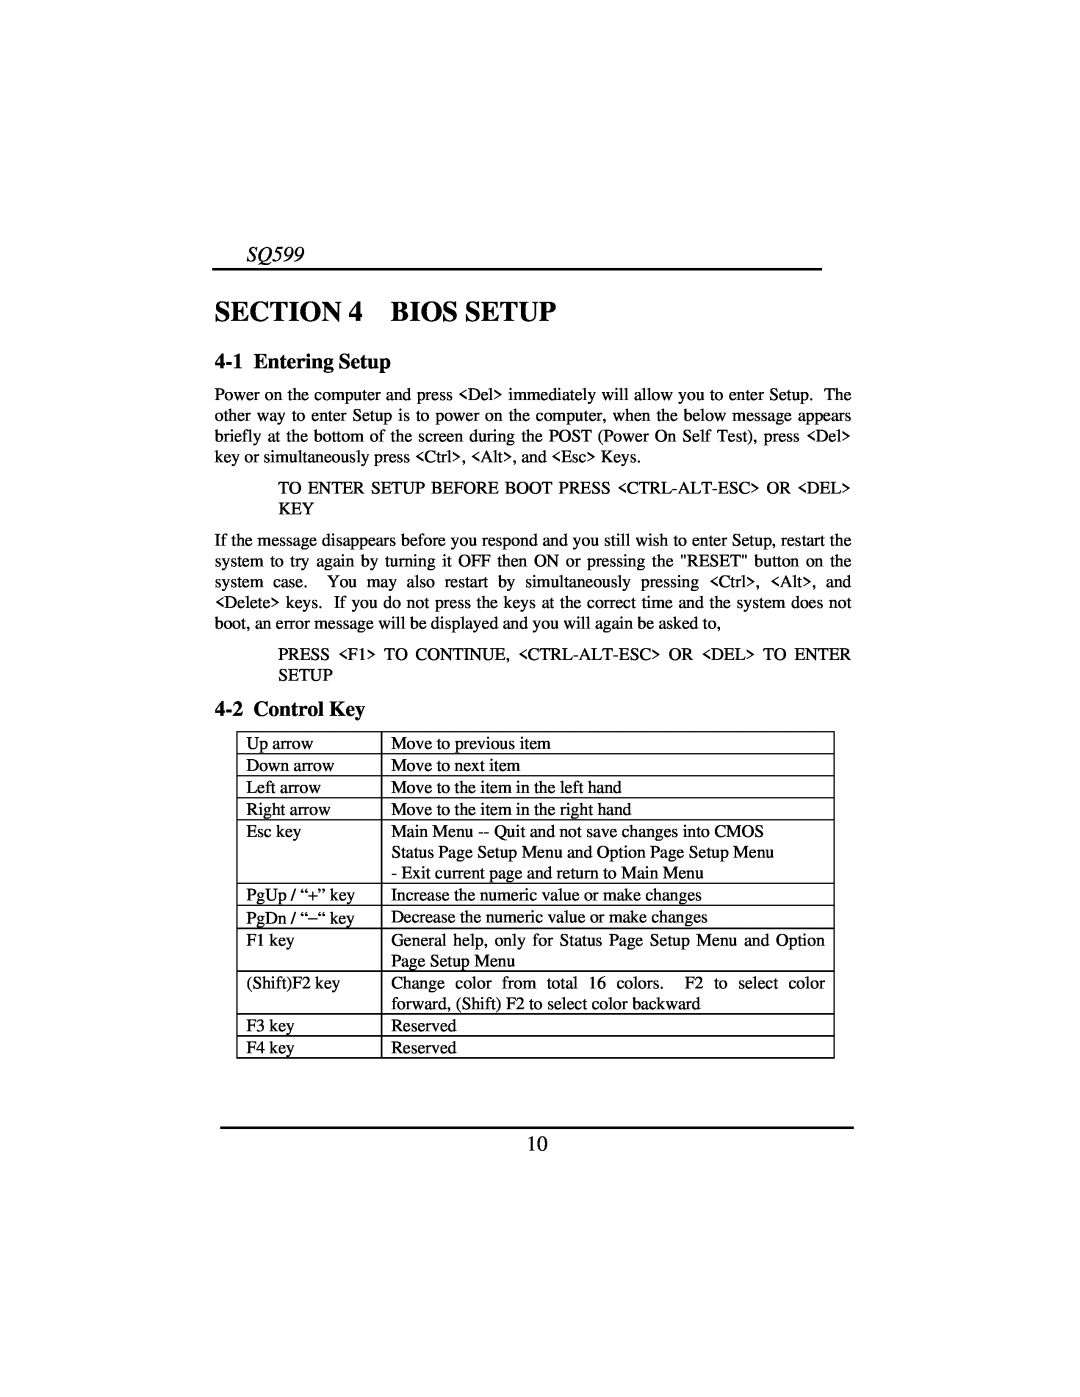 Intel SQ599 manual 4-1Entering Setup, 4-2Control Key, Bios Setup 